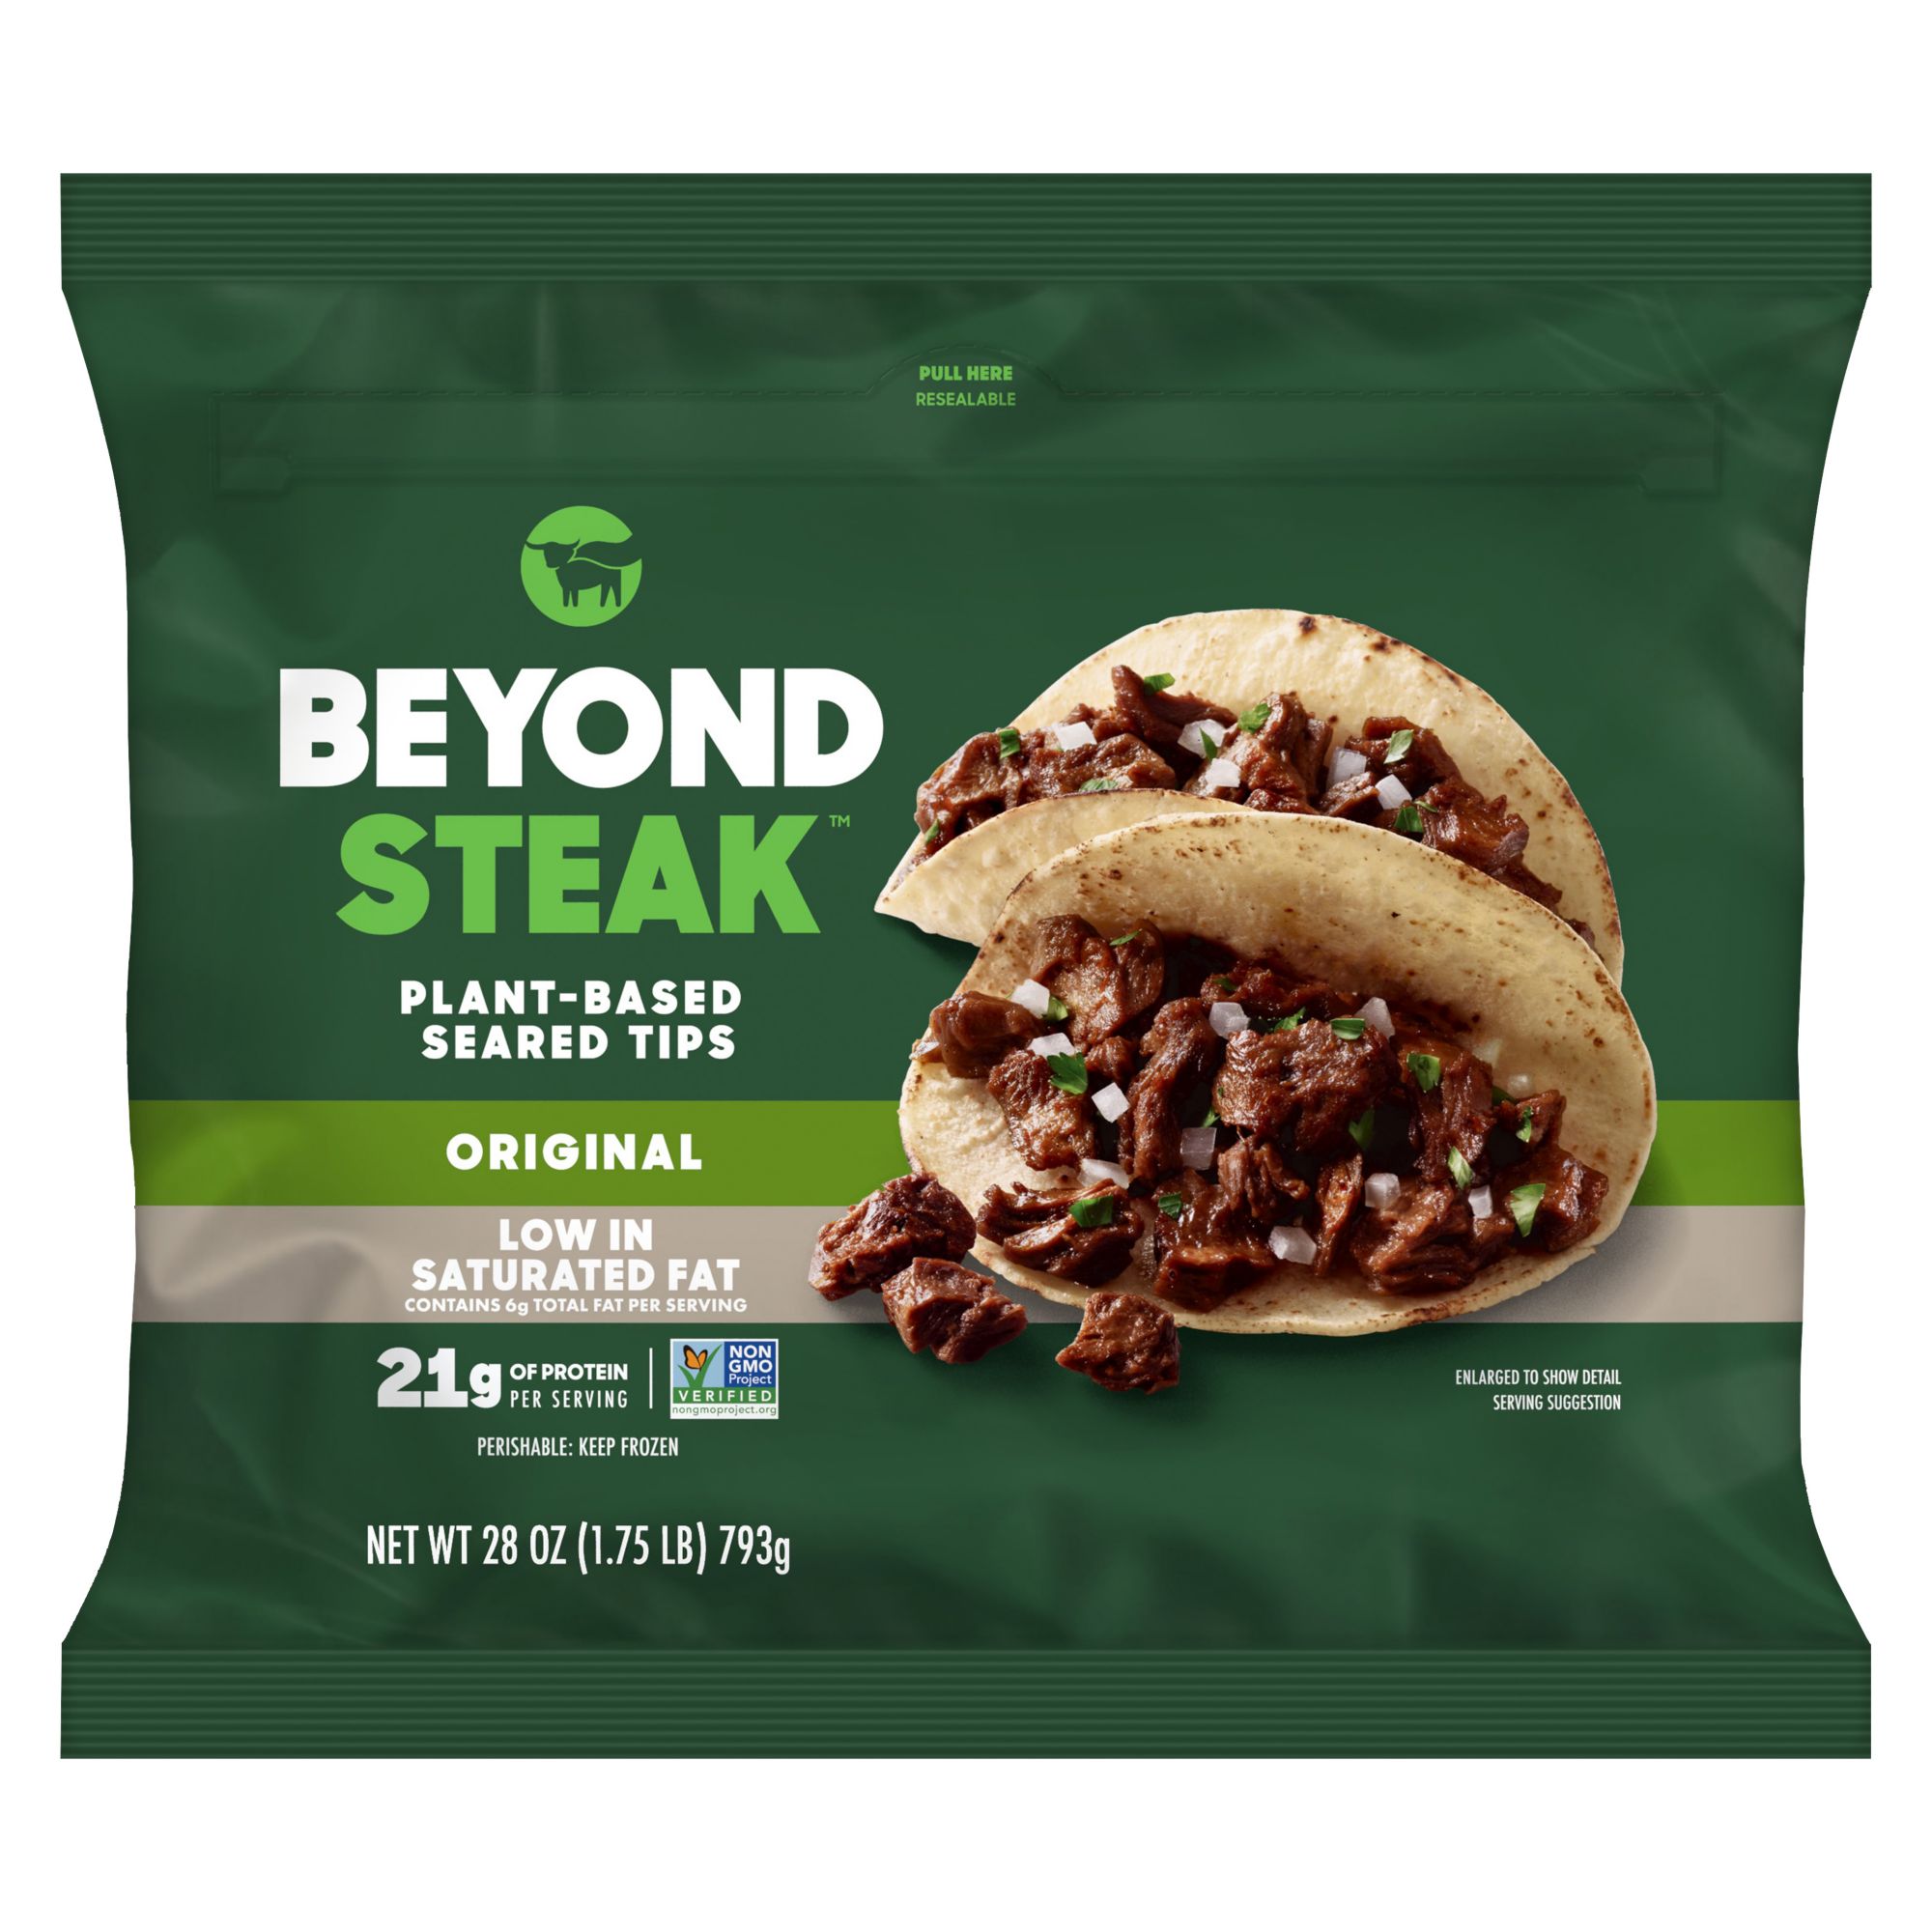 Beyond Steak Plant-Based Seared Tips, 1.75-1.80 lbs.